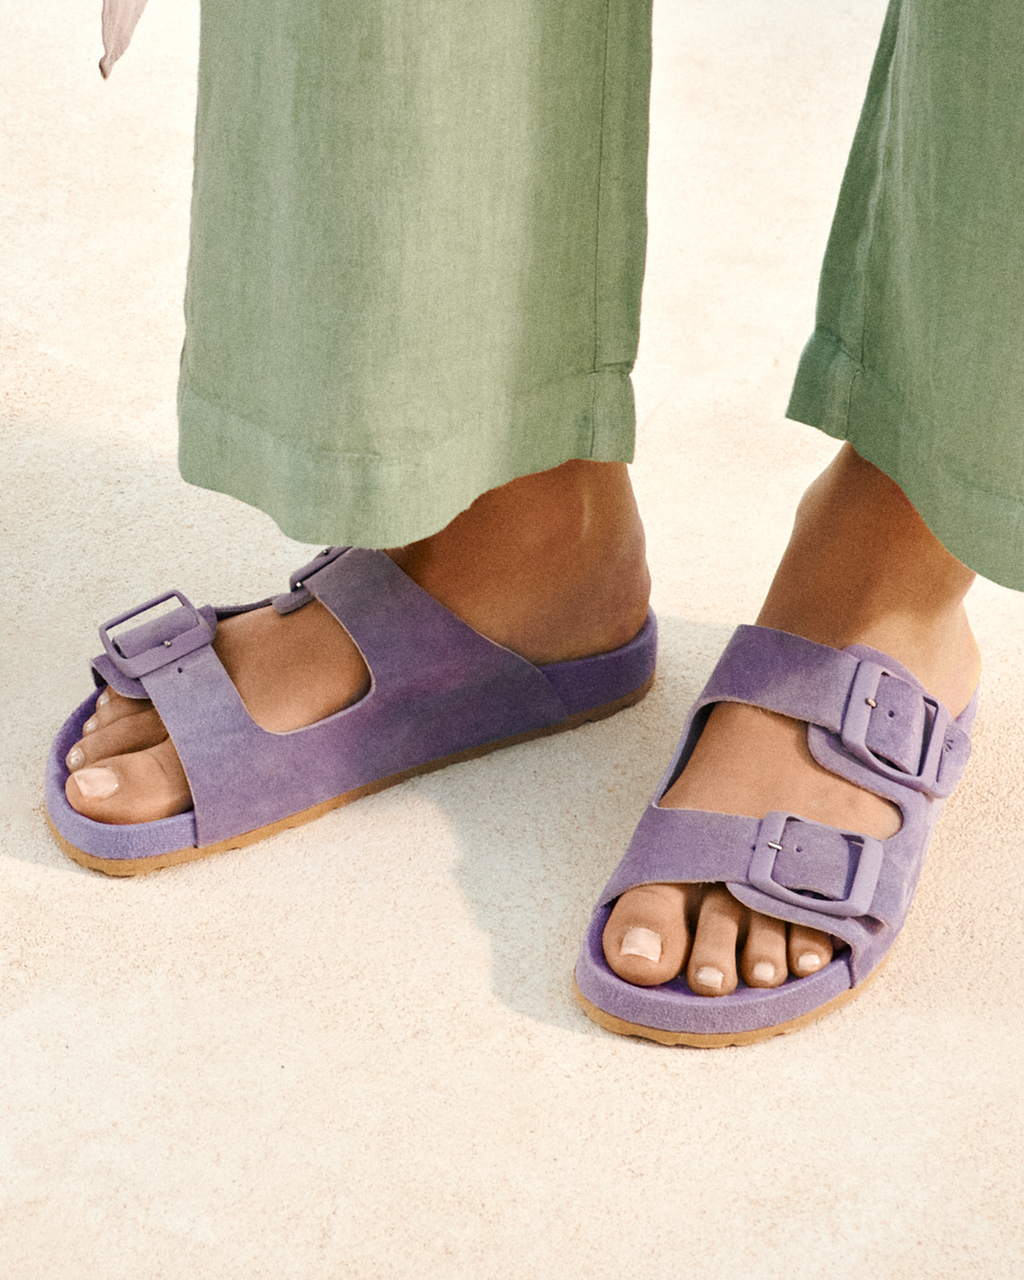 Suede Traveler Nordic Sandals - Hamptons Wisteria Lilac